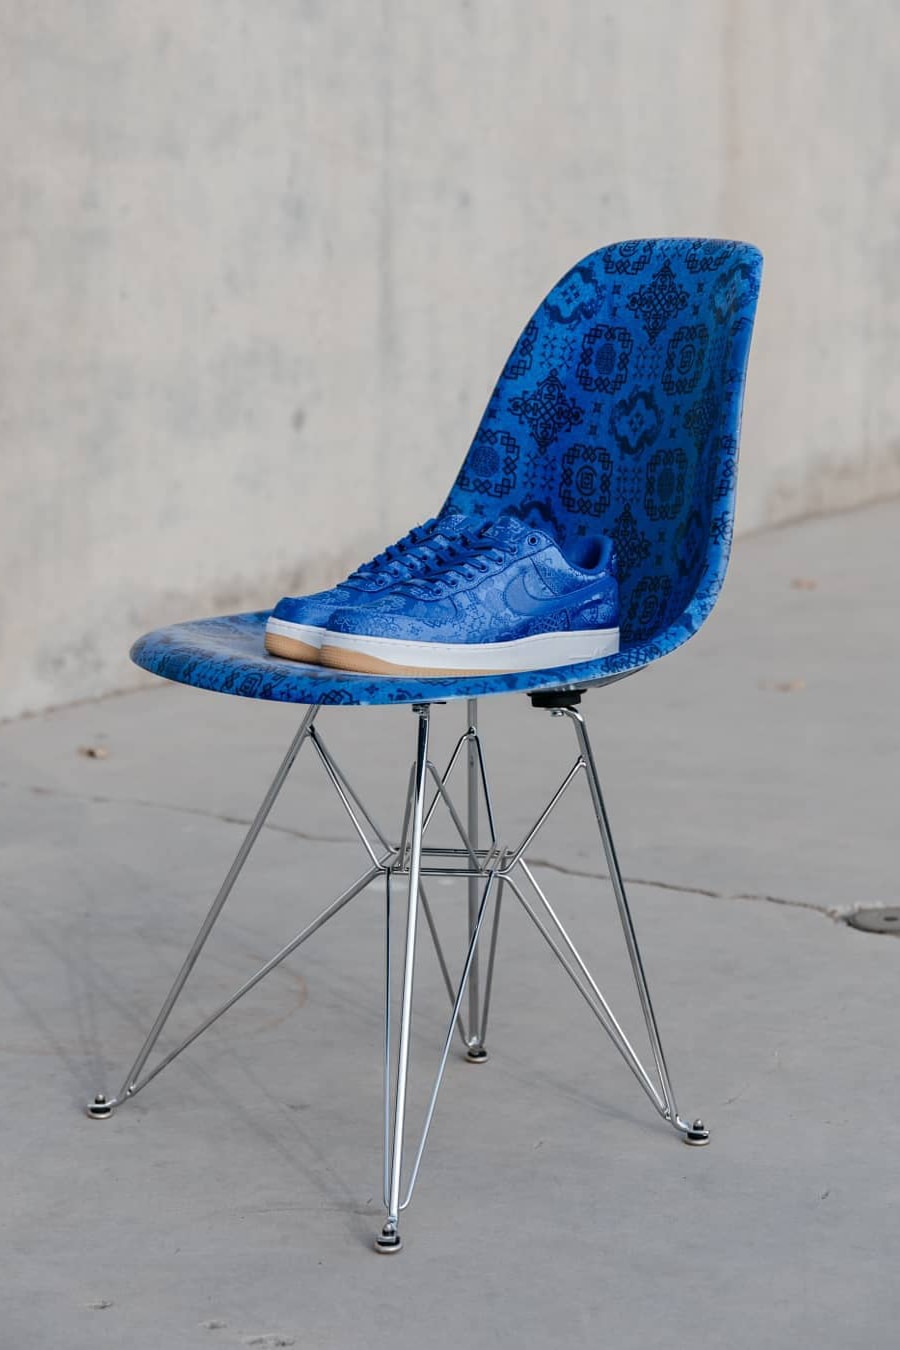 CLOT x Modernica 聯手限量打造「藍絲綢」貝殼椅